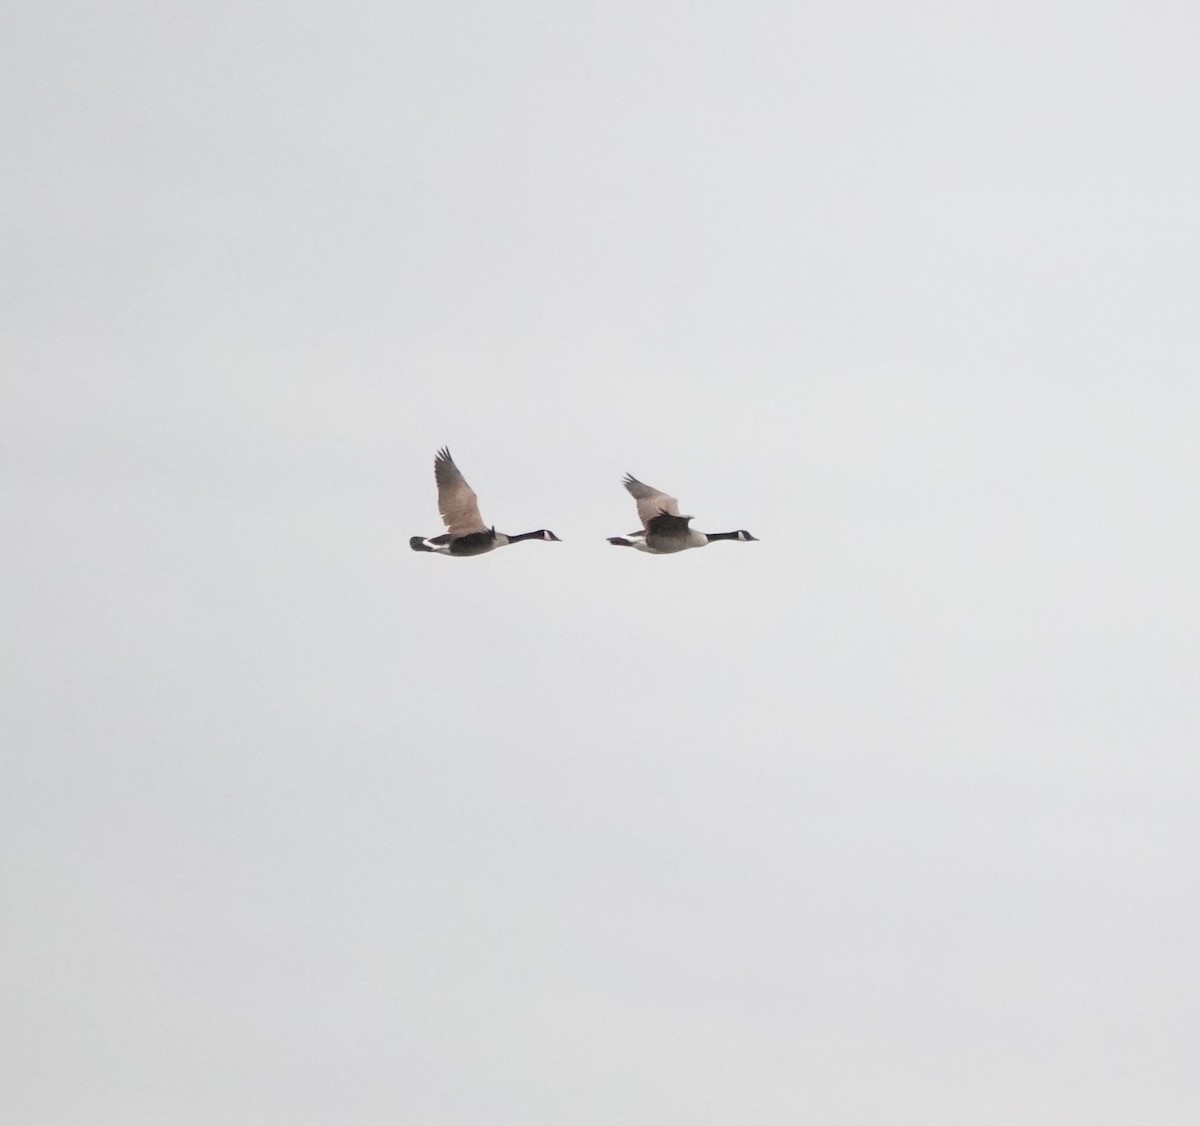 Canada Goose - Timothy Spahr